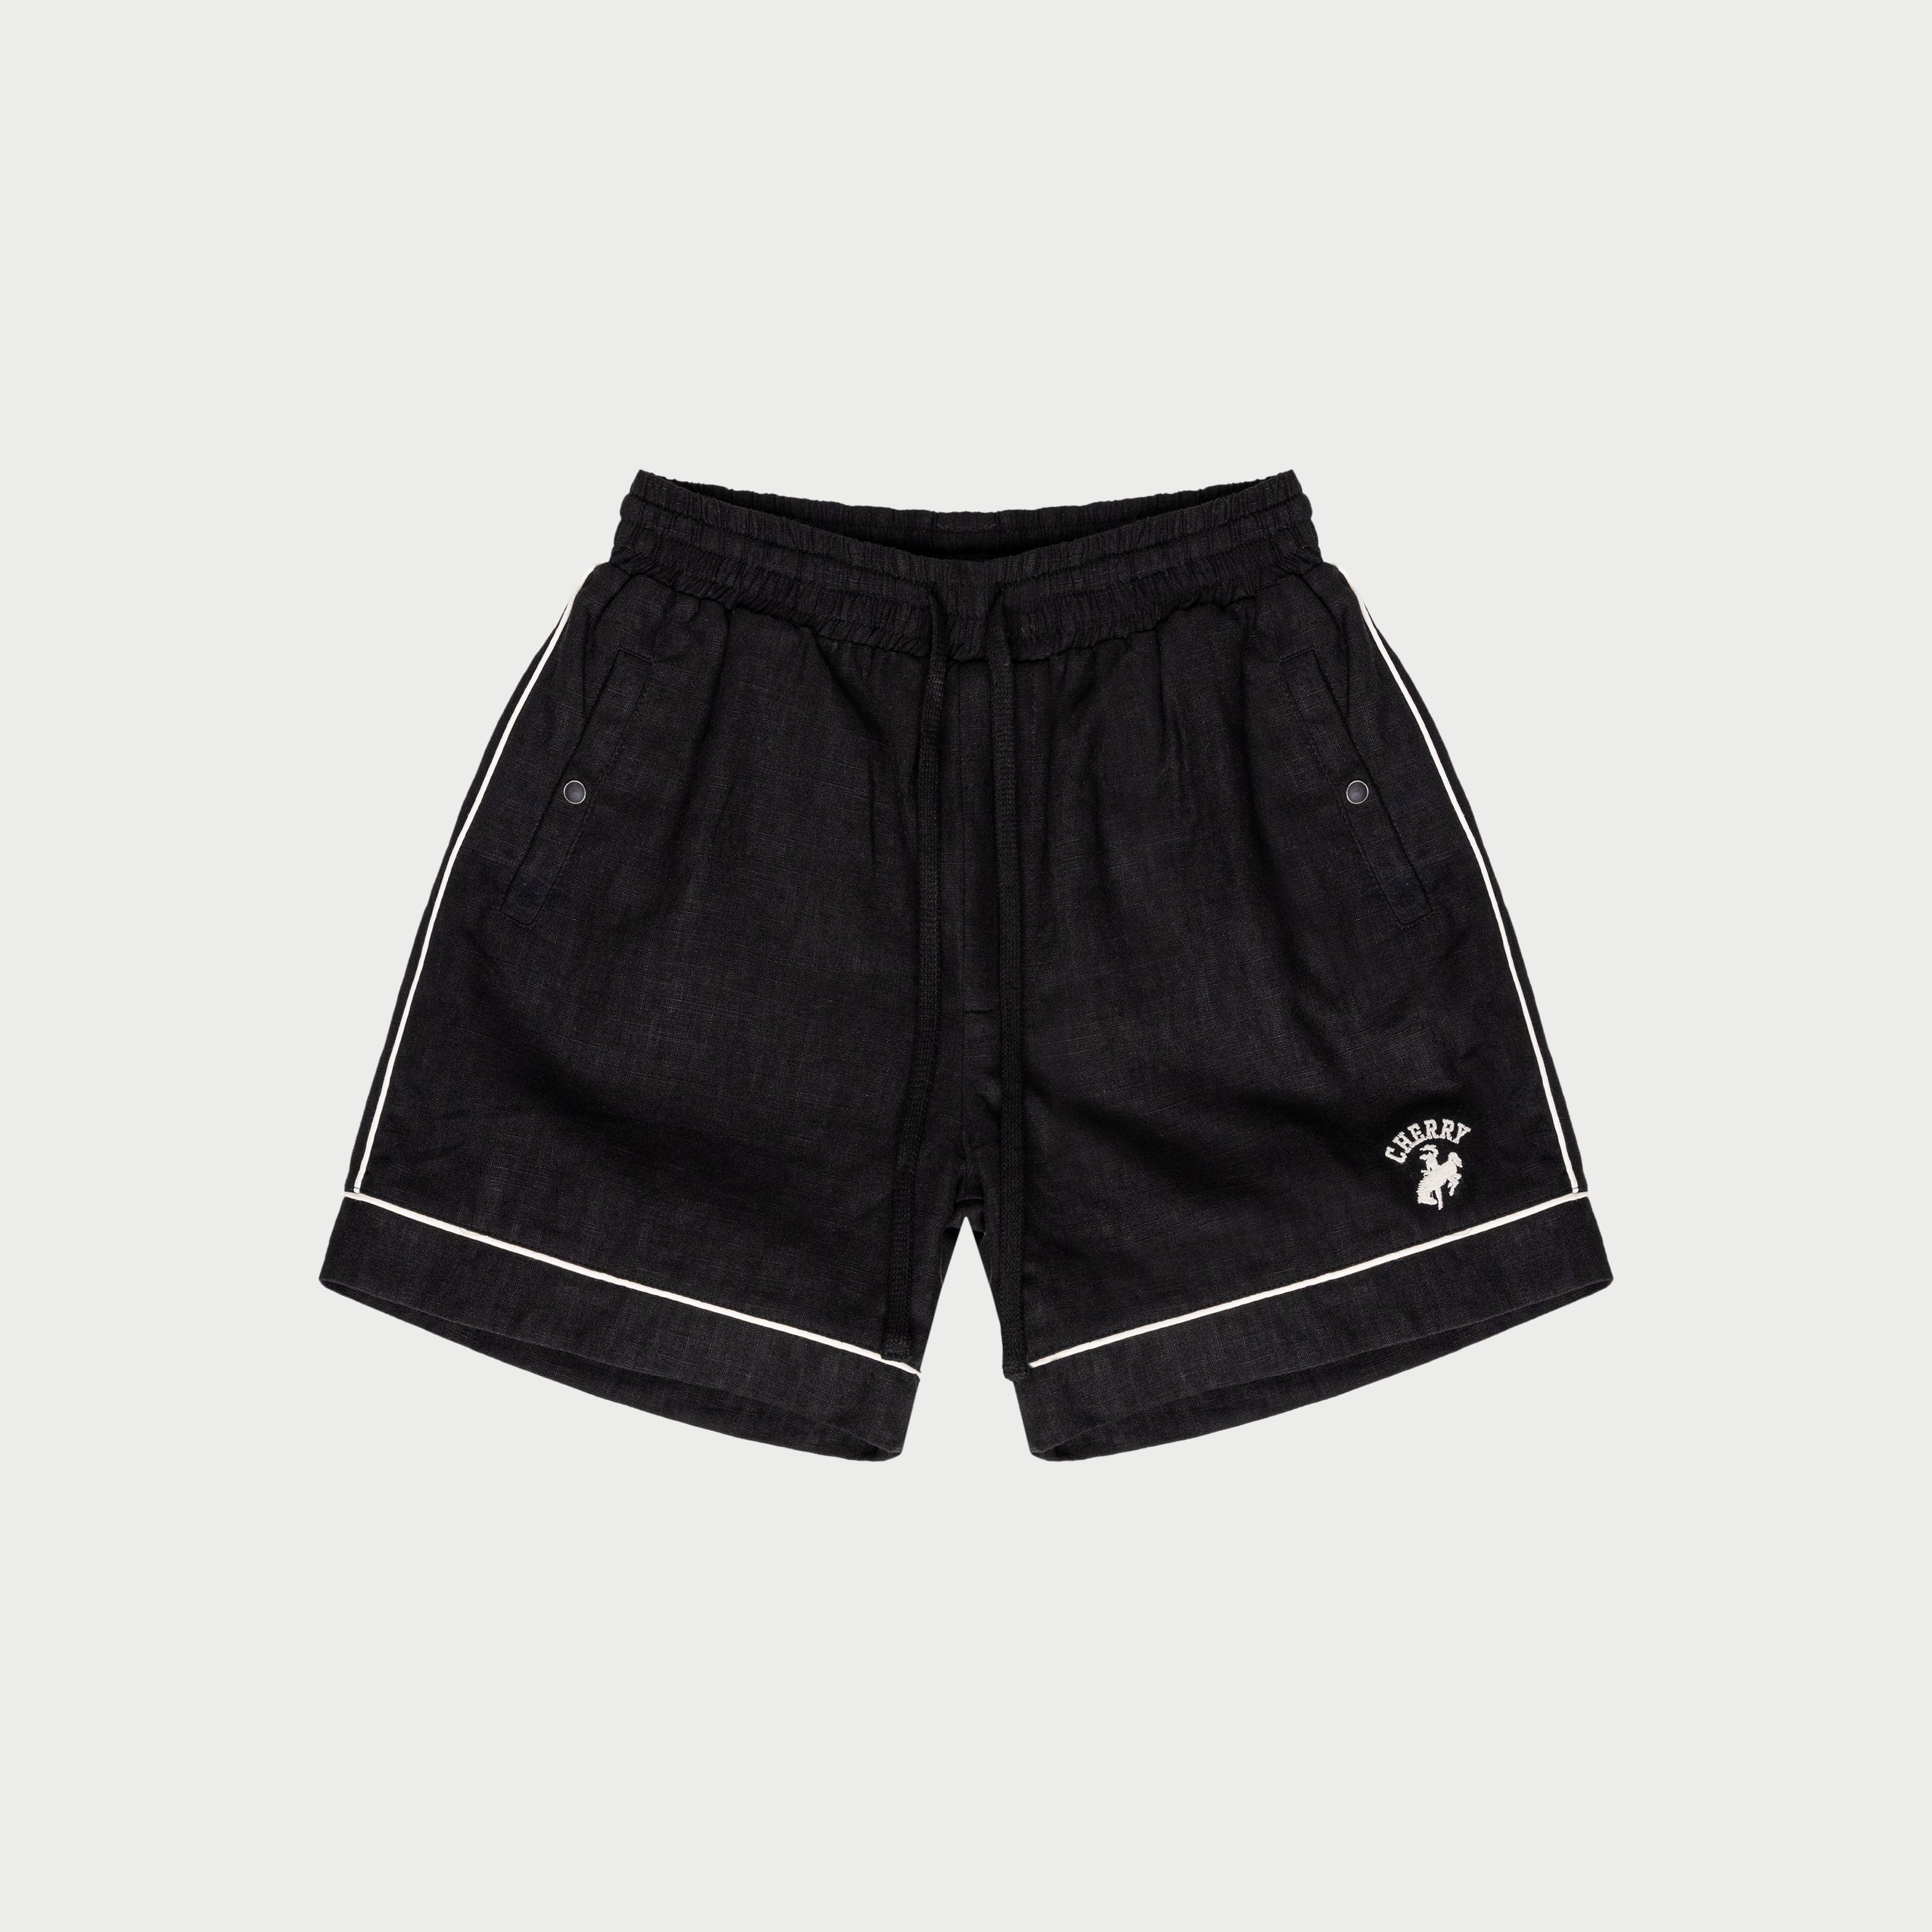 Linen_Athletic_shorts_black_front.jpg